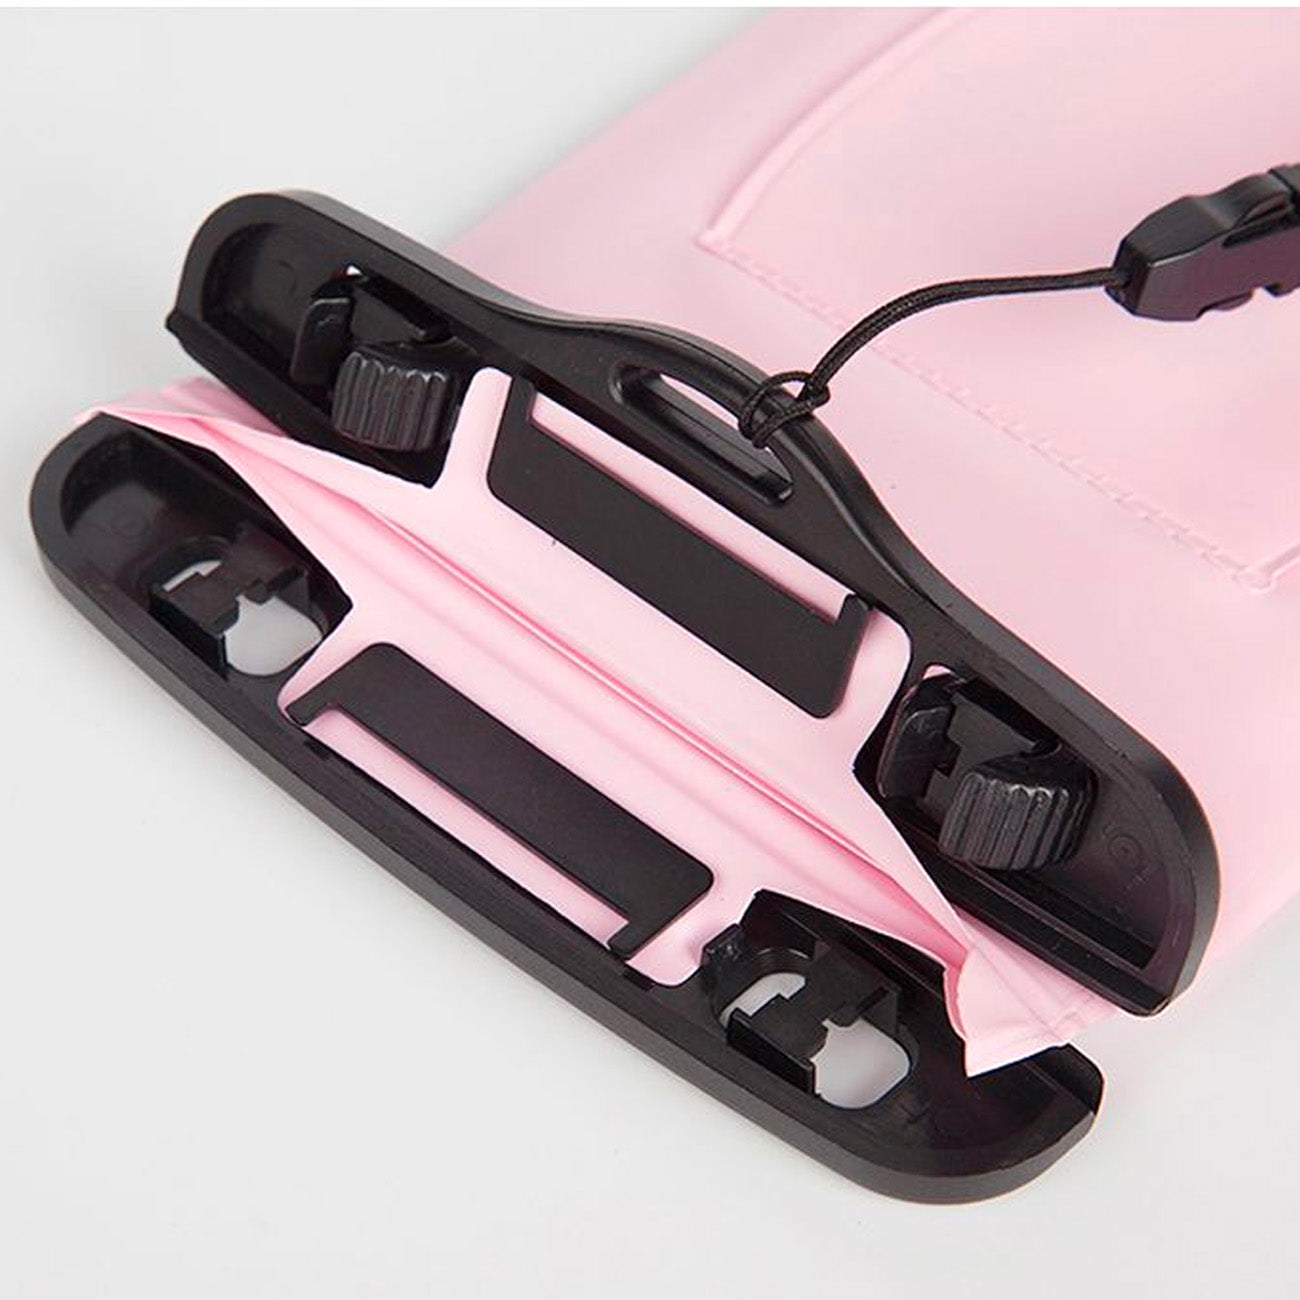 PVC waterproof armband phone case - transparent